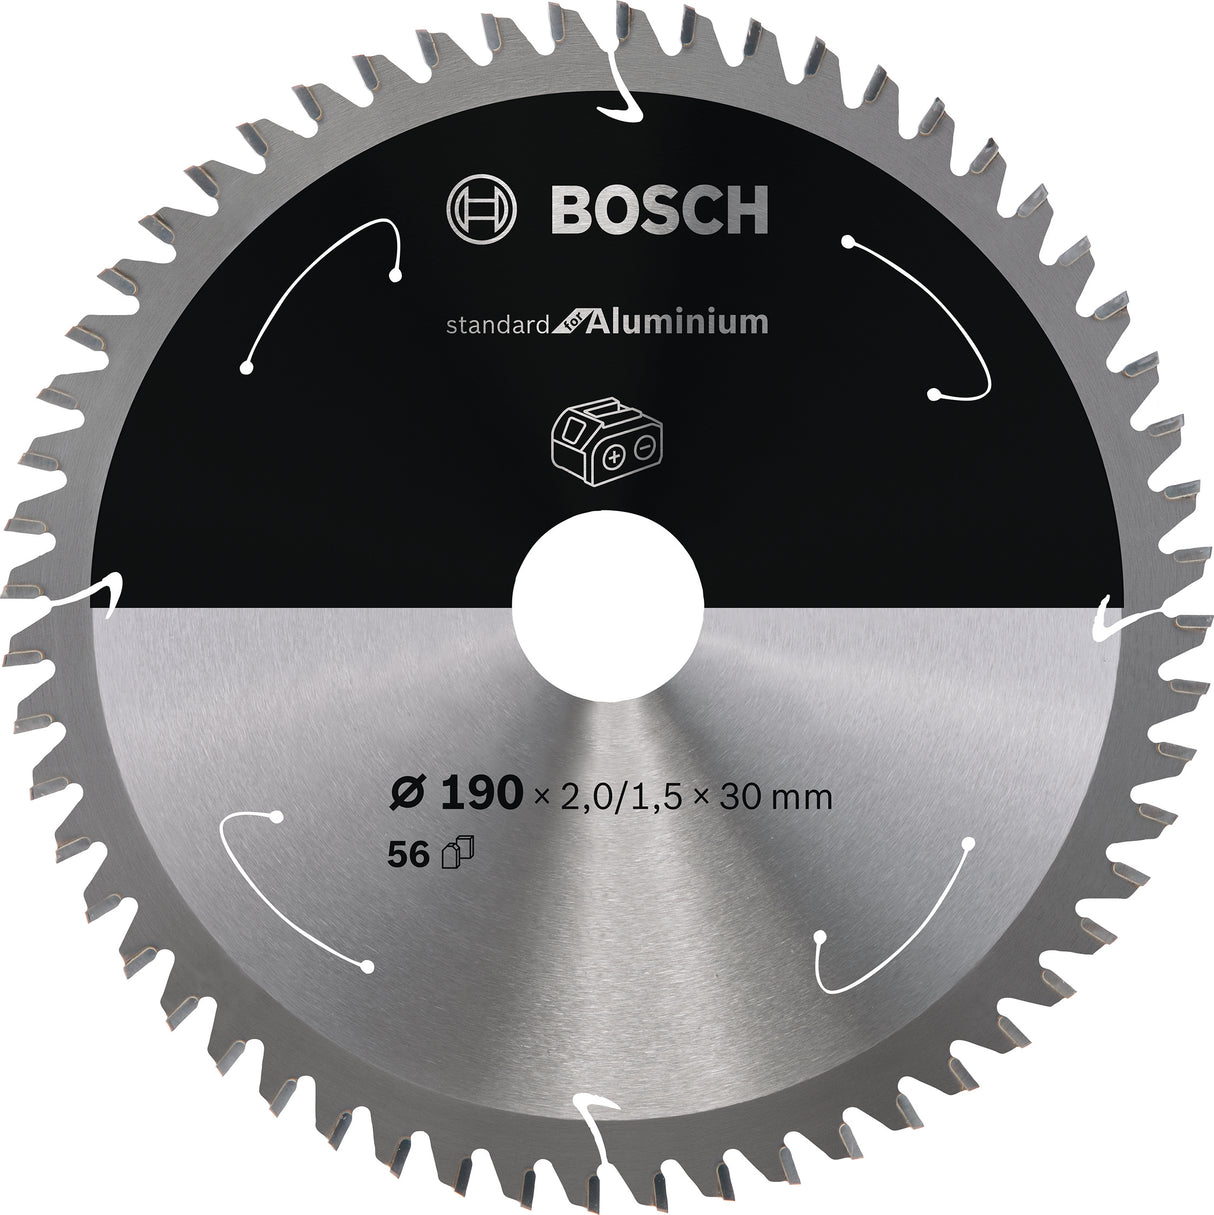 Bosch Professional Aluminium Circular Saw Blade for Cordless Saws - 190x2/1.5x30 T56 - Standard